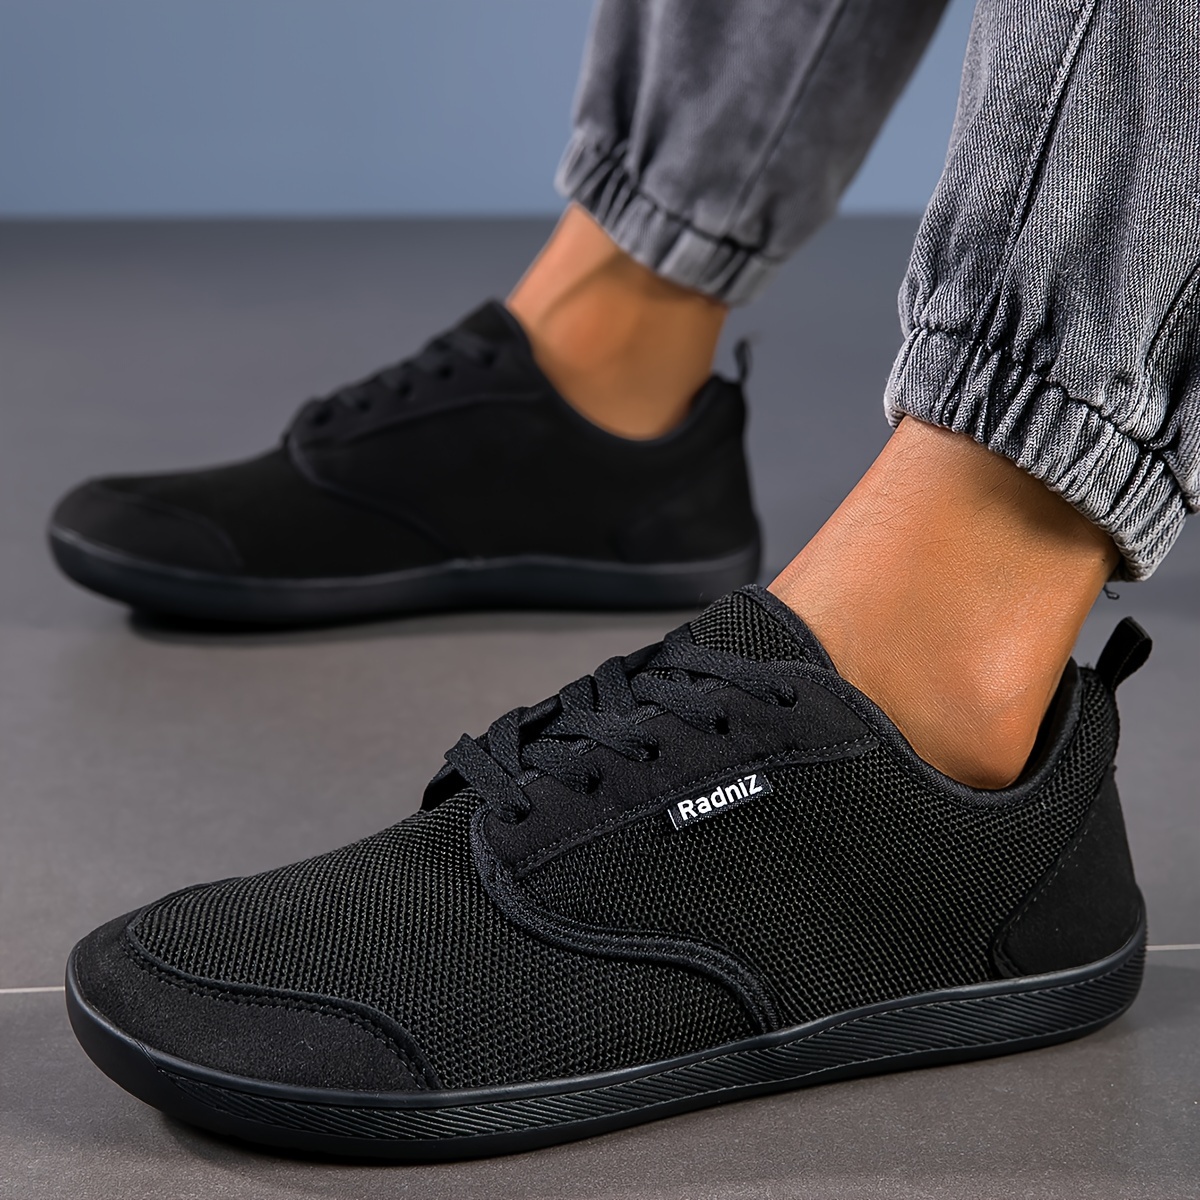 solid versatile sneakers men s minimalist style round toe details 9